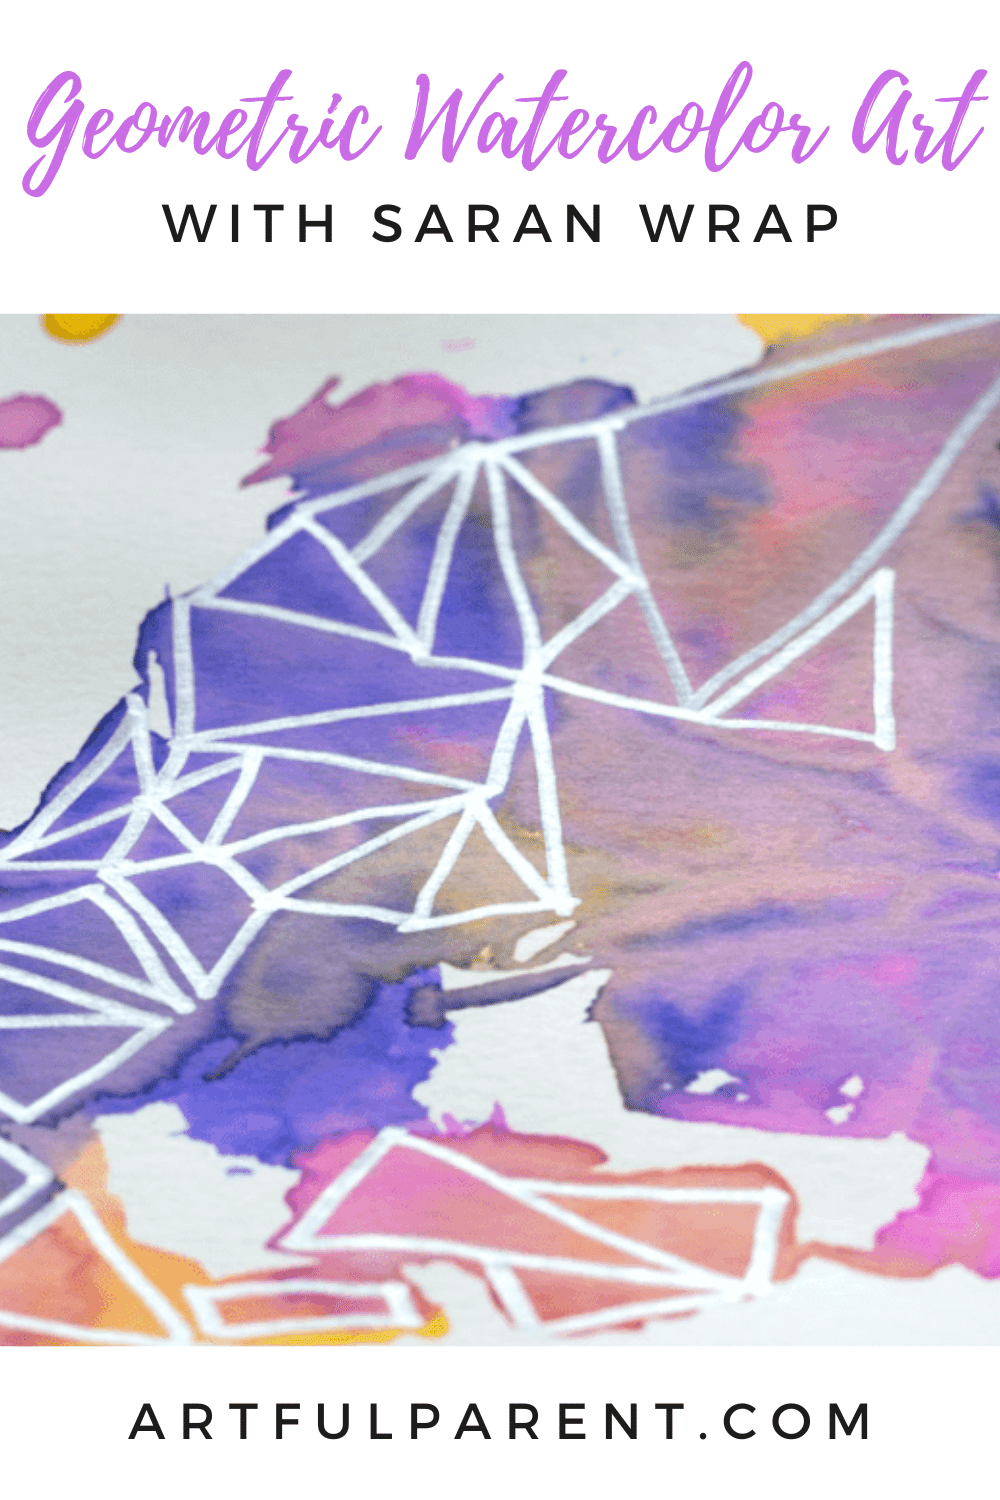 How to Make Geometric Watercolor Art with Saran Wrap